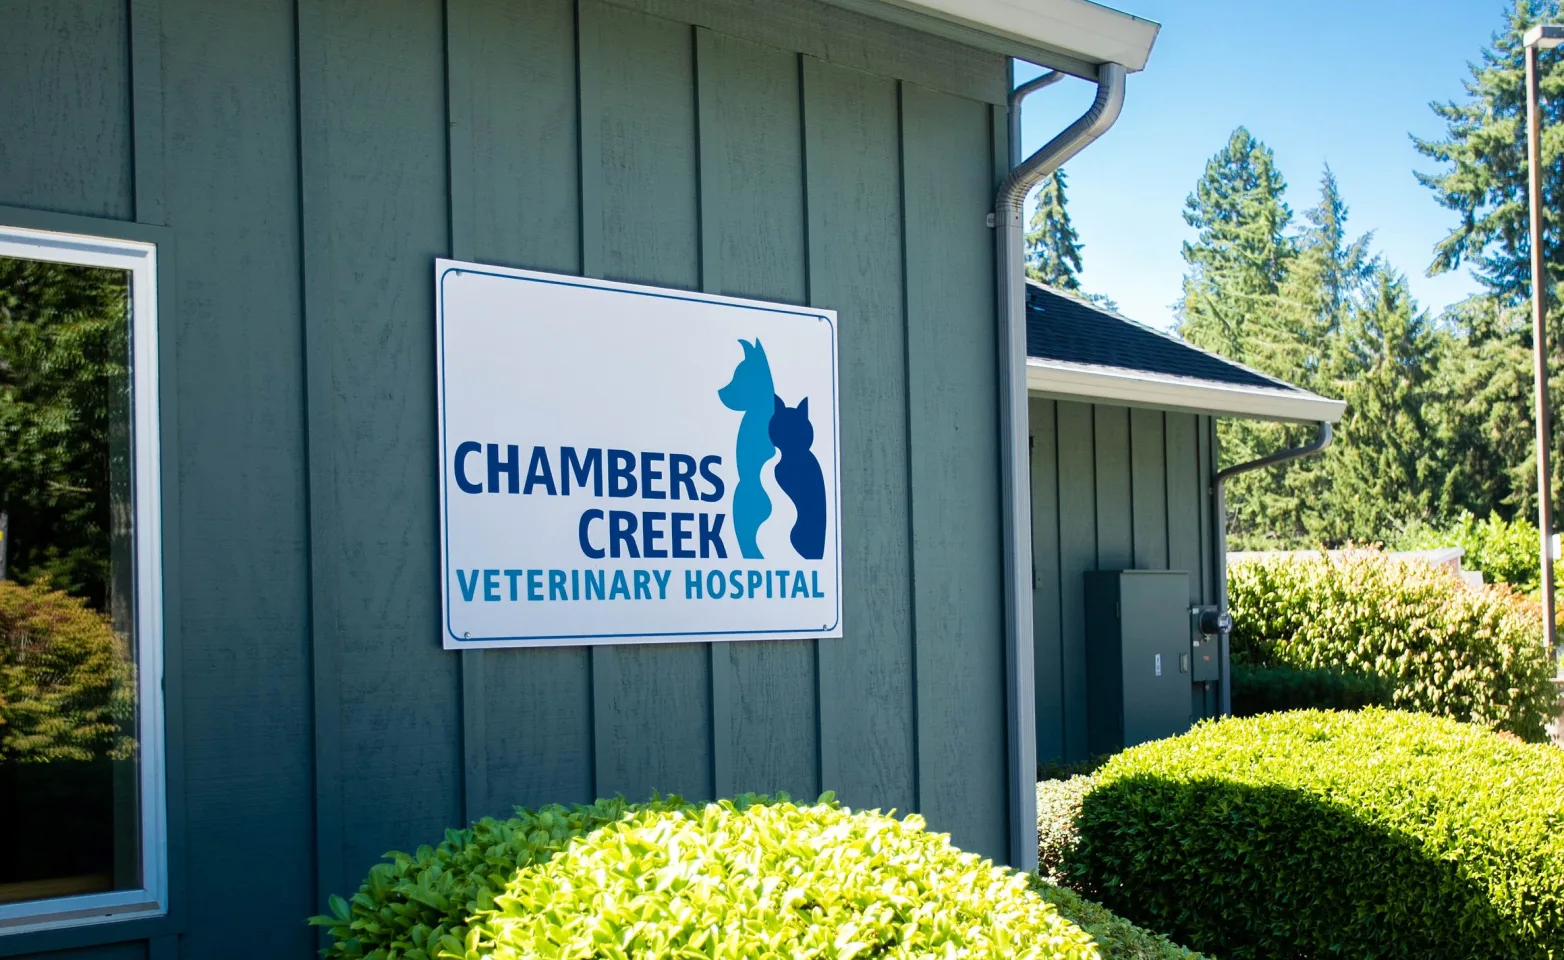 Chambers Creek Veterinary Hospital